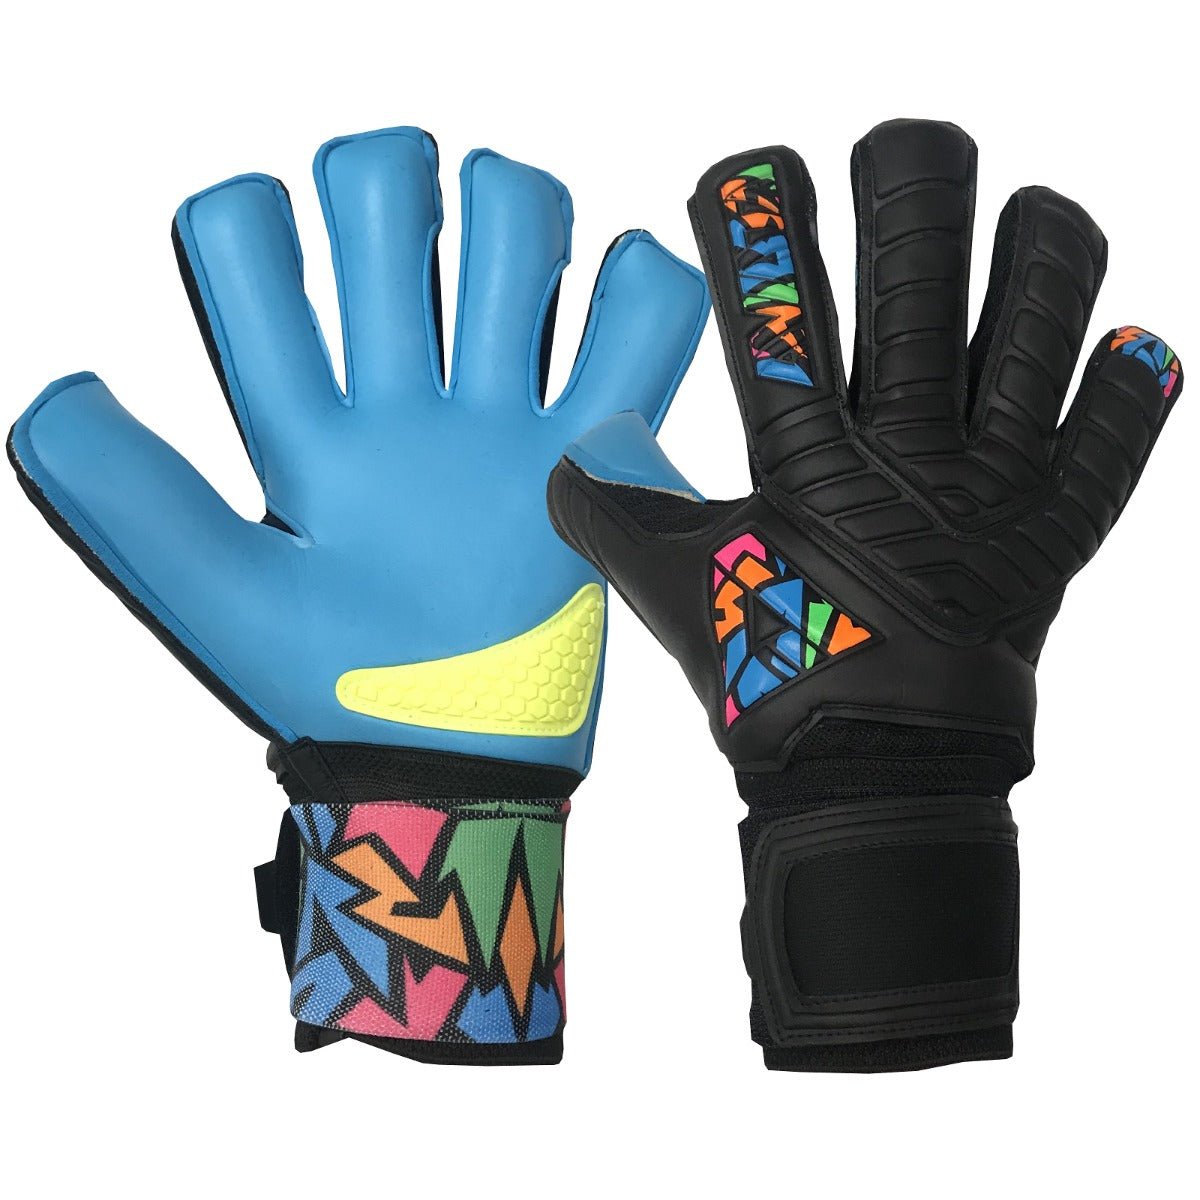 Aviata Halcyon Graffiti Goalkeeper Gloves - Black-Graffiti (Pair)